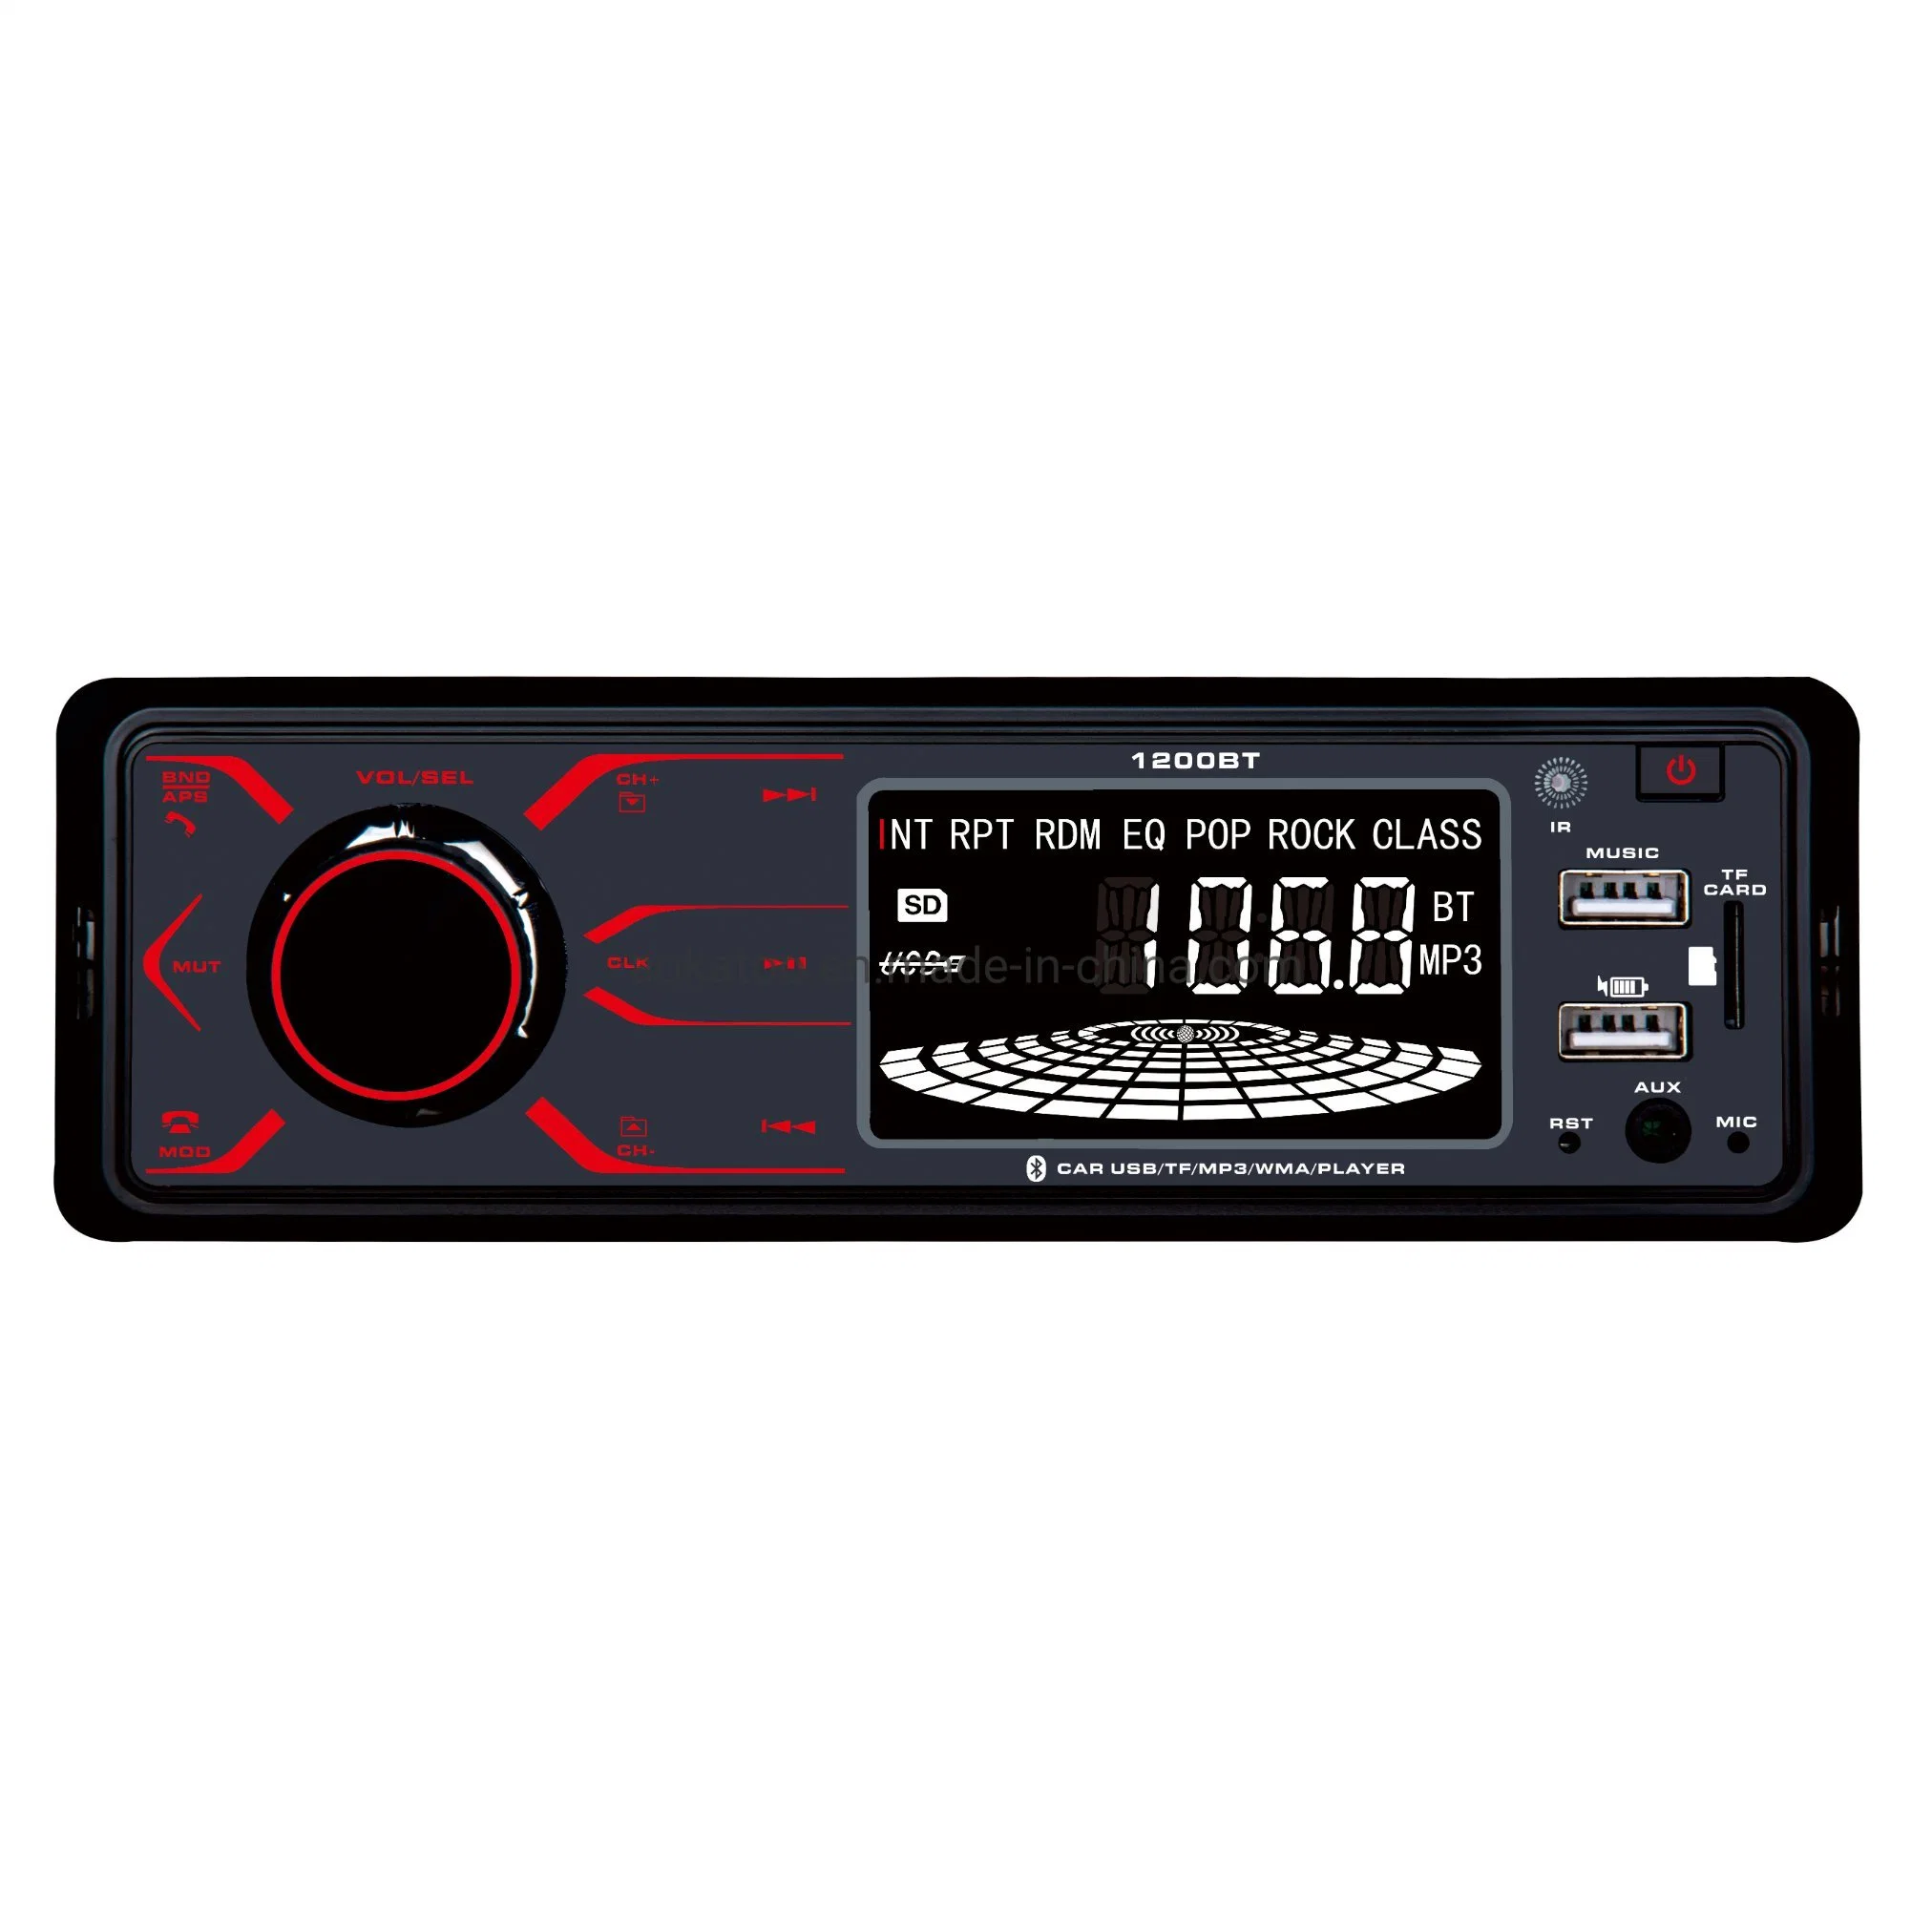 Нажмите кнопку автомобильная аудио MP3-плеер с Bluetooth ISO FM